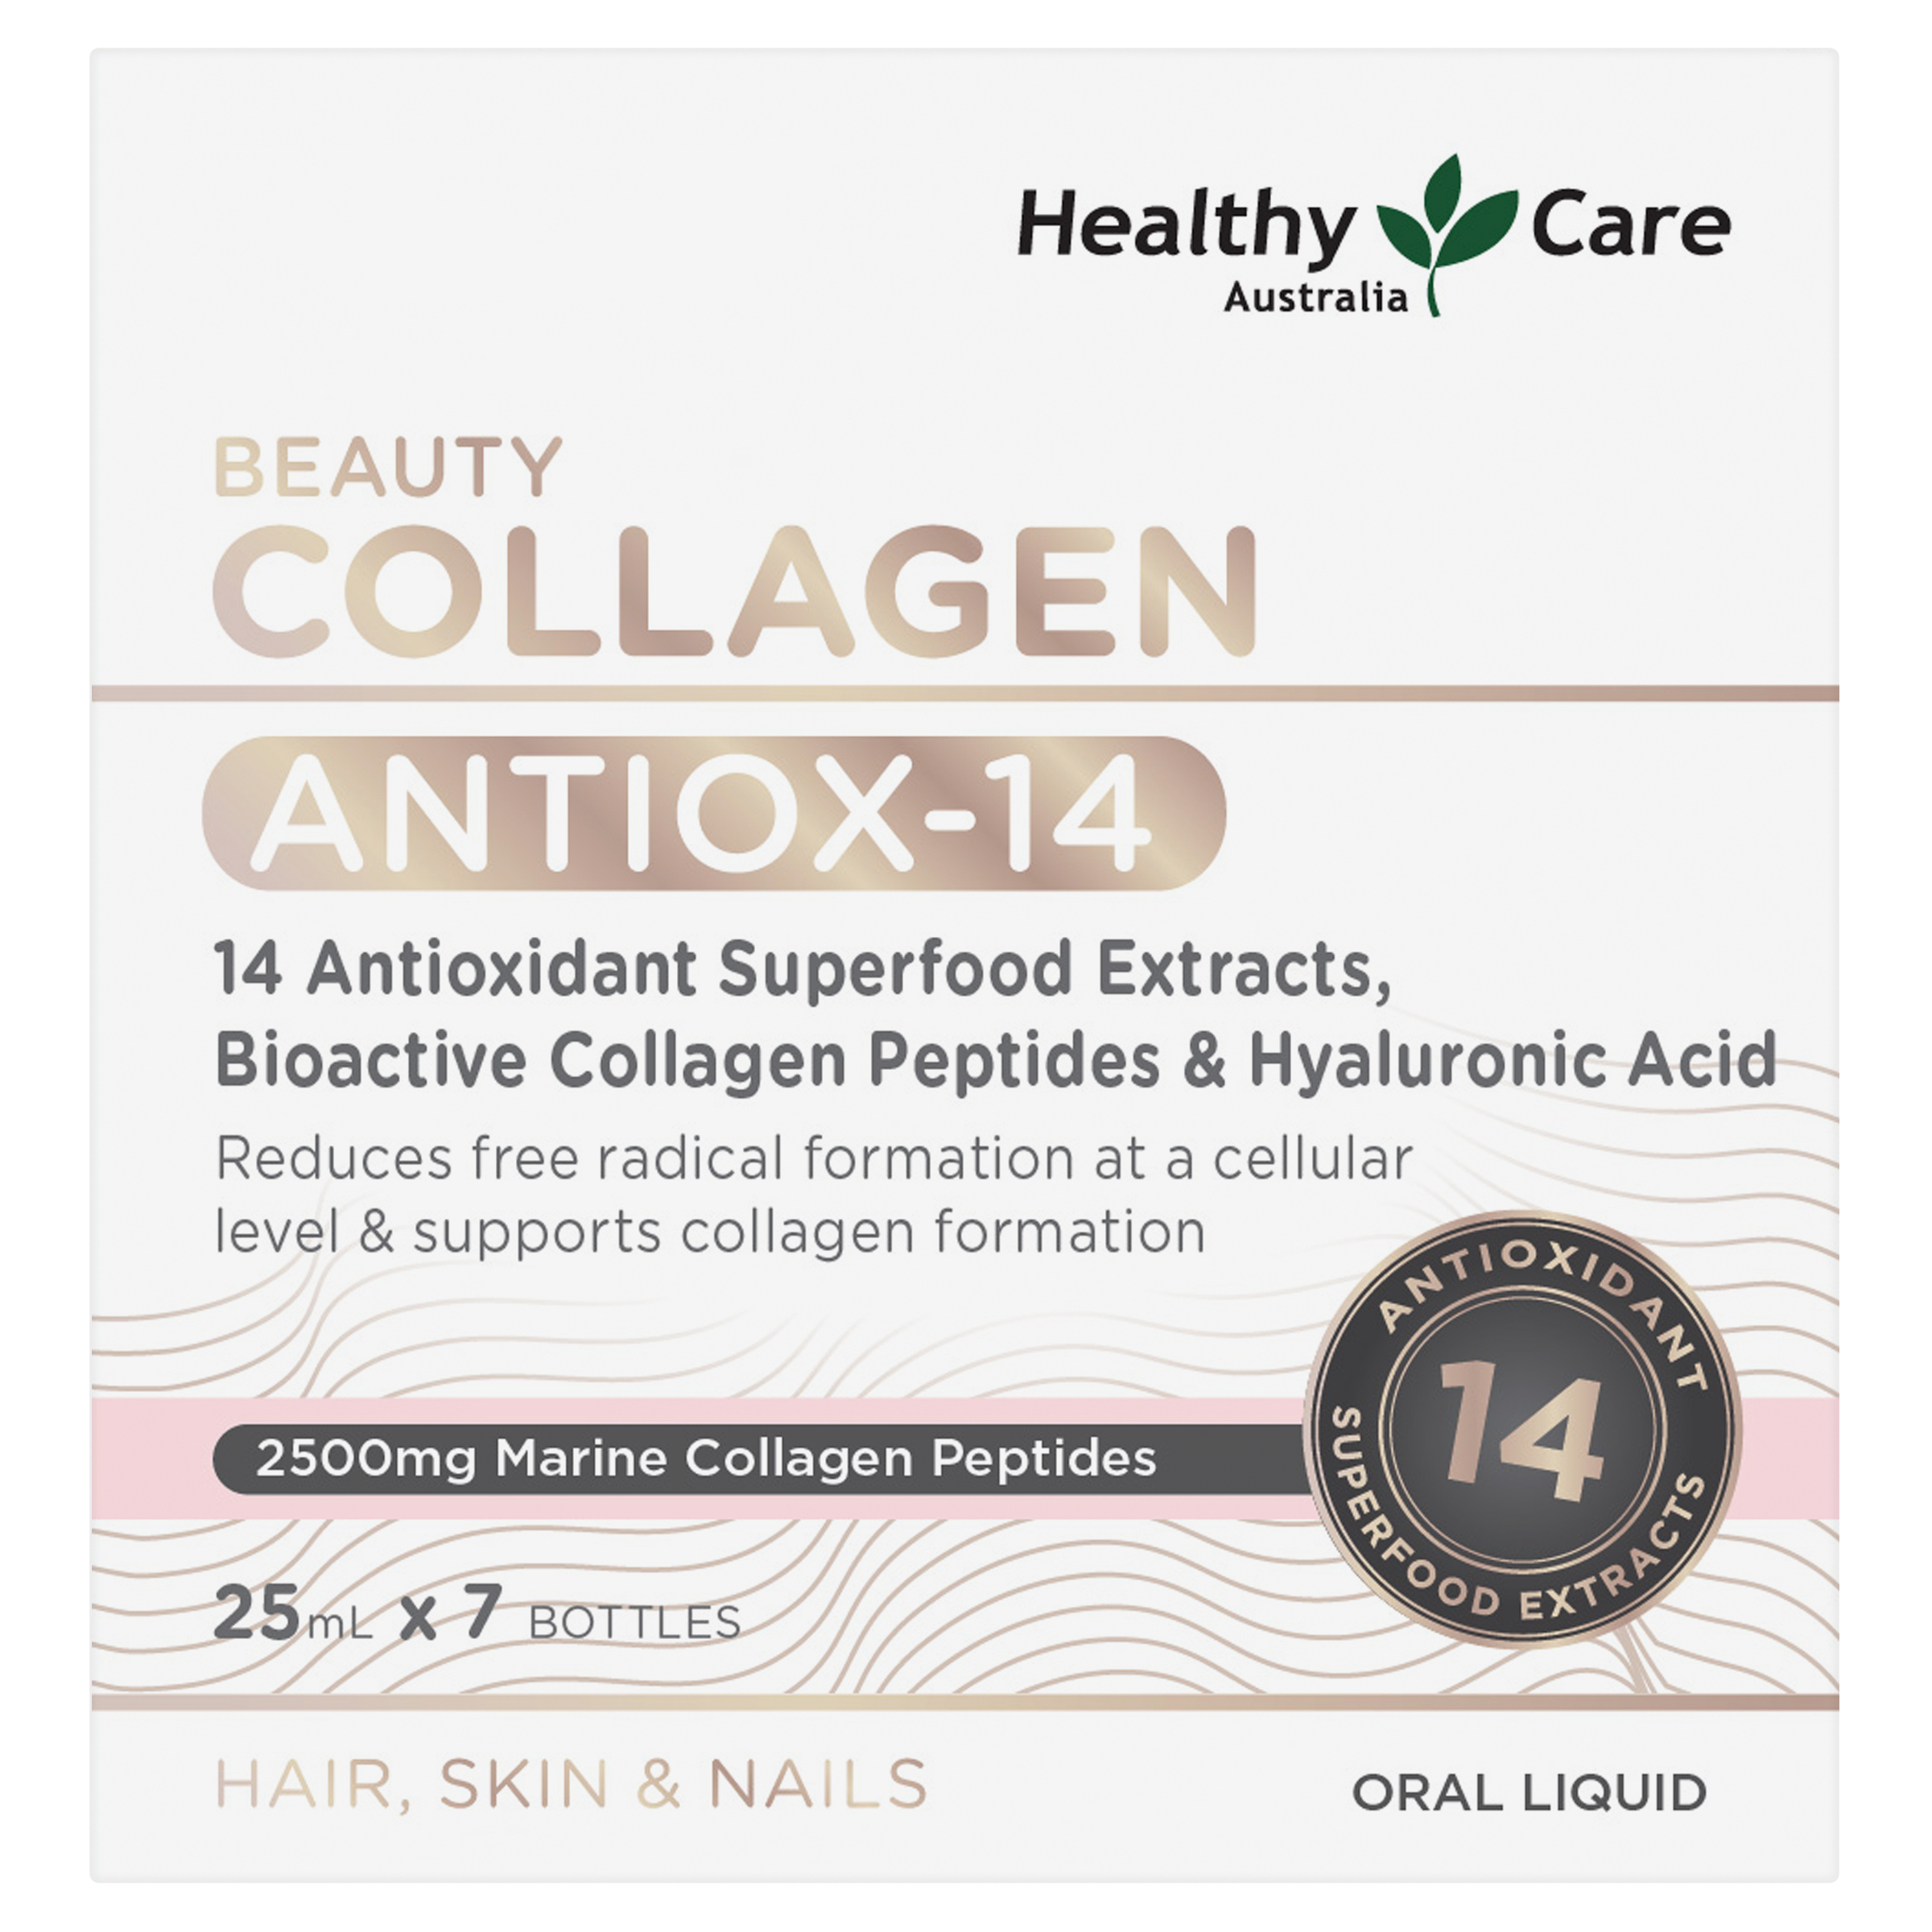 Beauty Collagen Antiox-14 PLUS Shots 25mL x 7 Pek